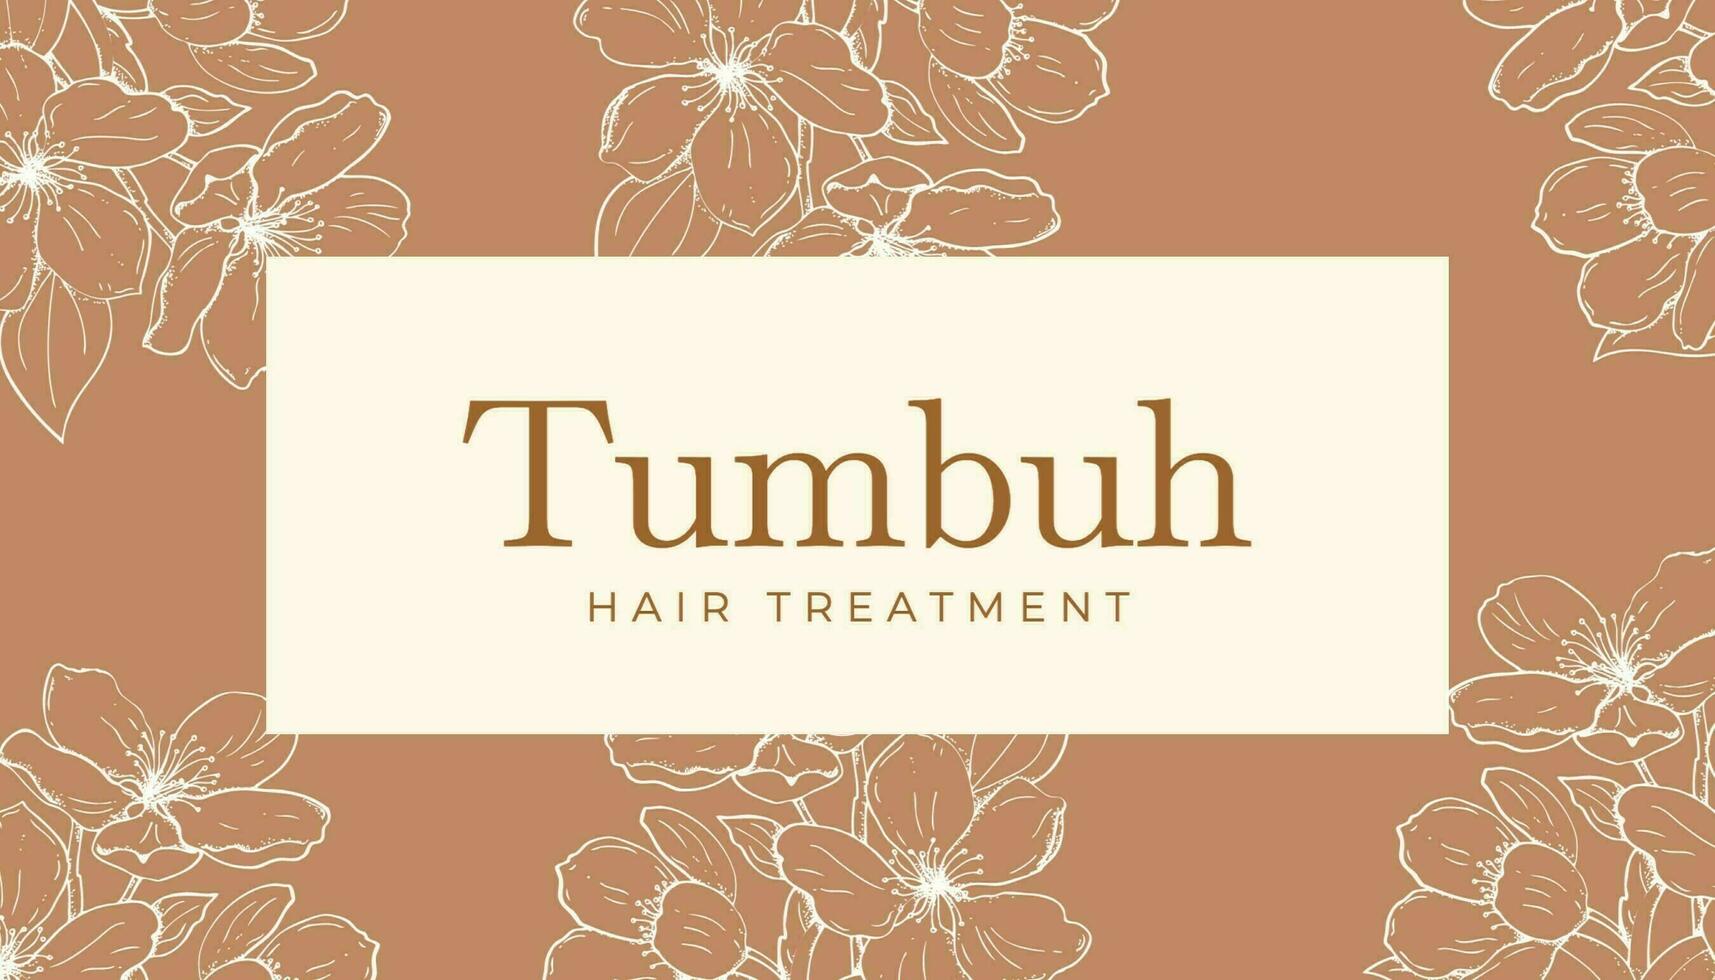 Brown Floral Hair Treatment Business Card template